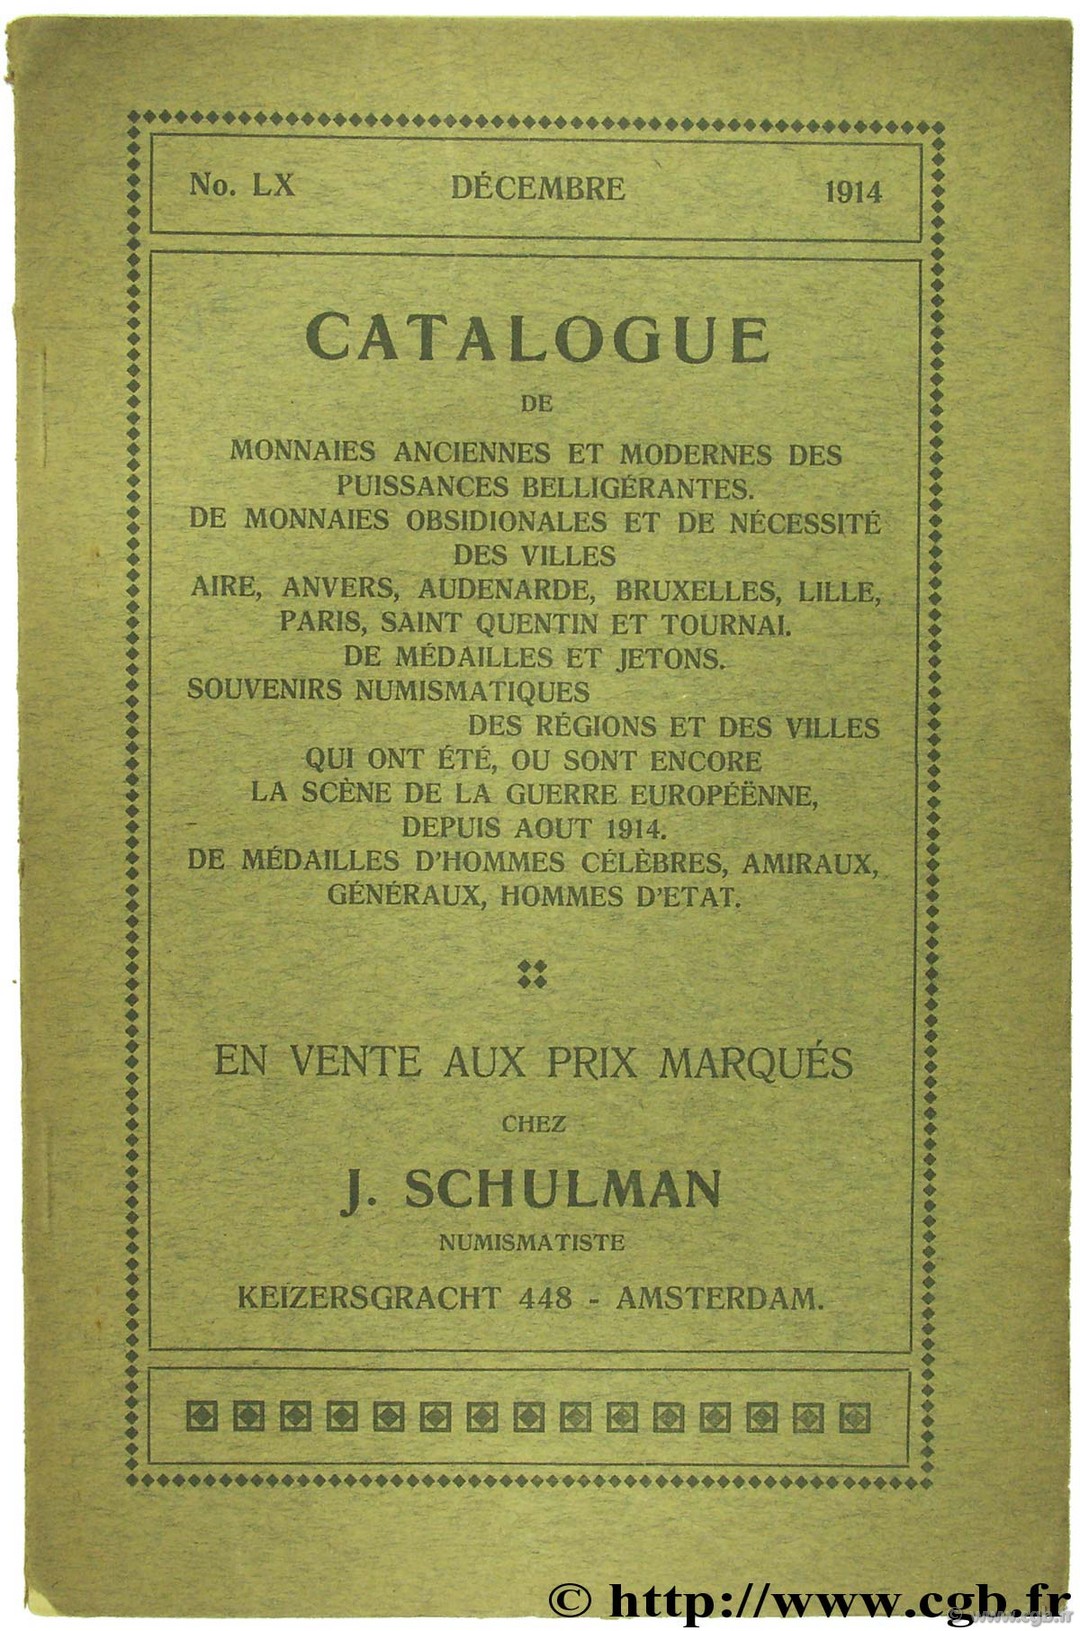 Catalogue No. LX SCHULMAN J.